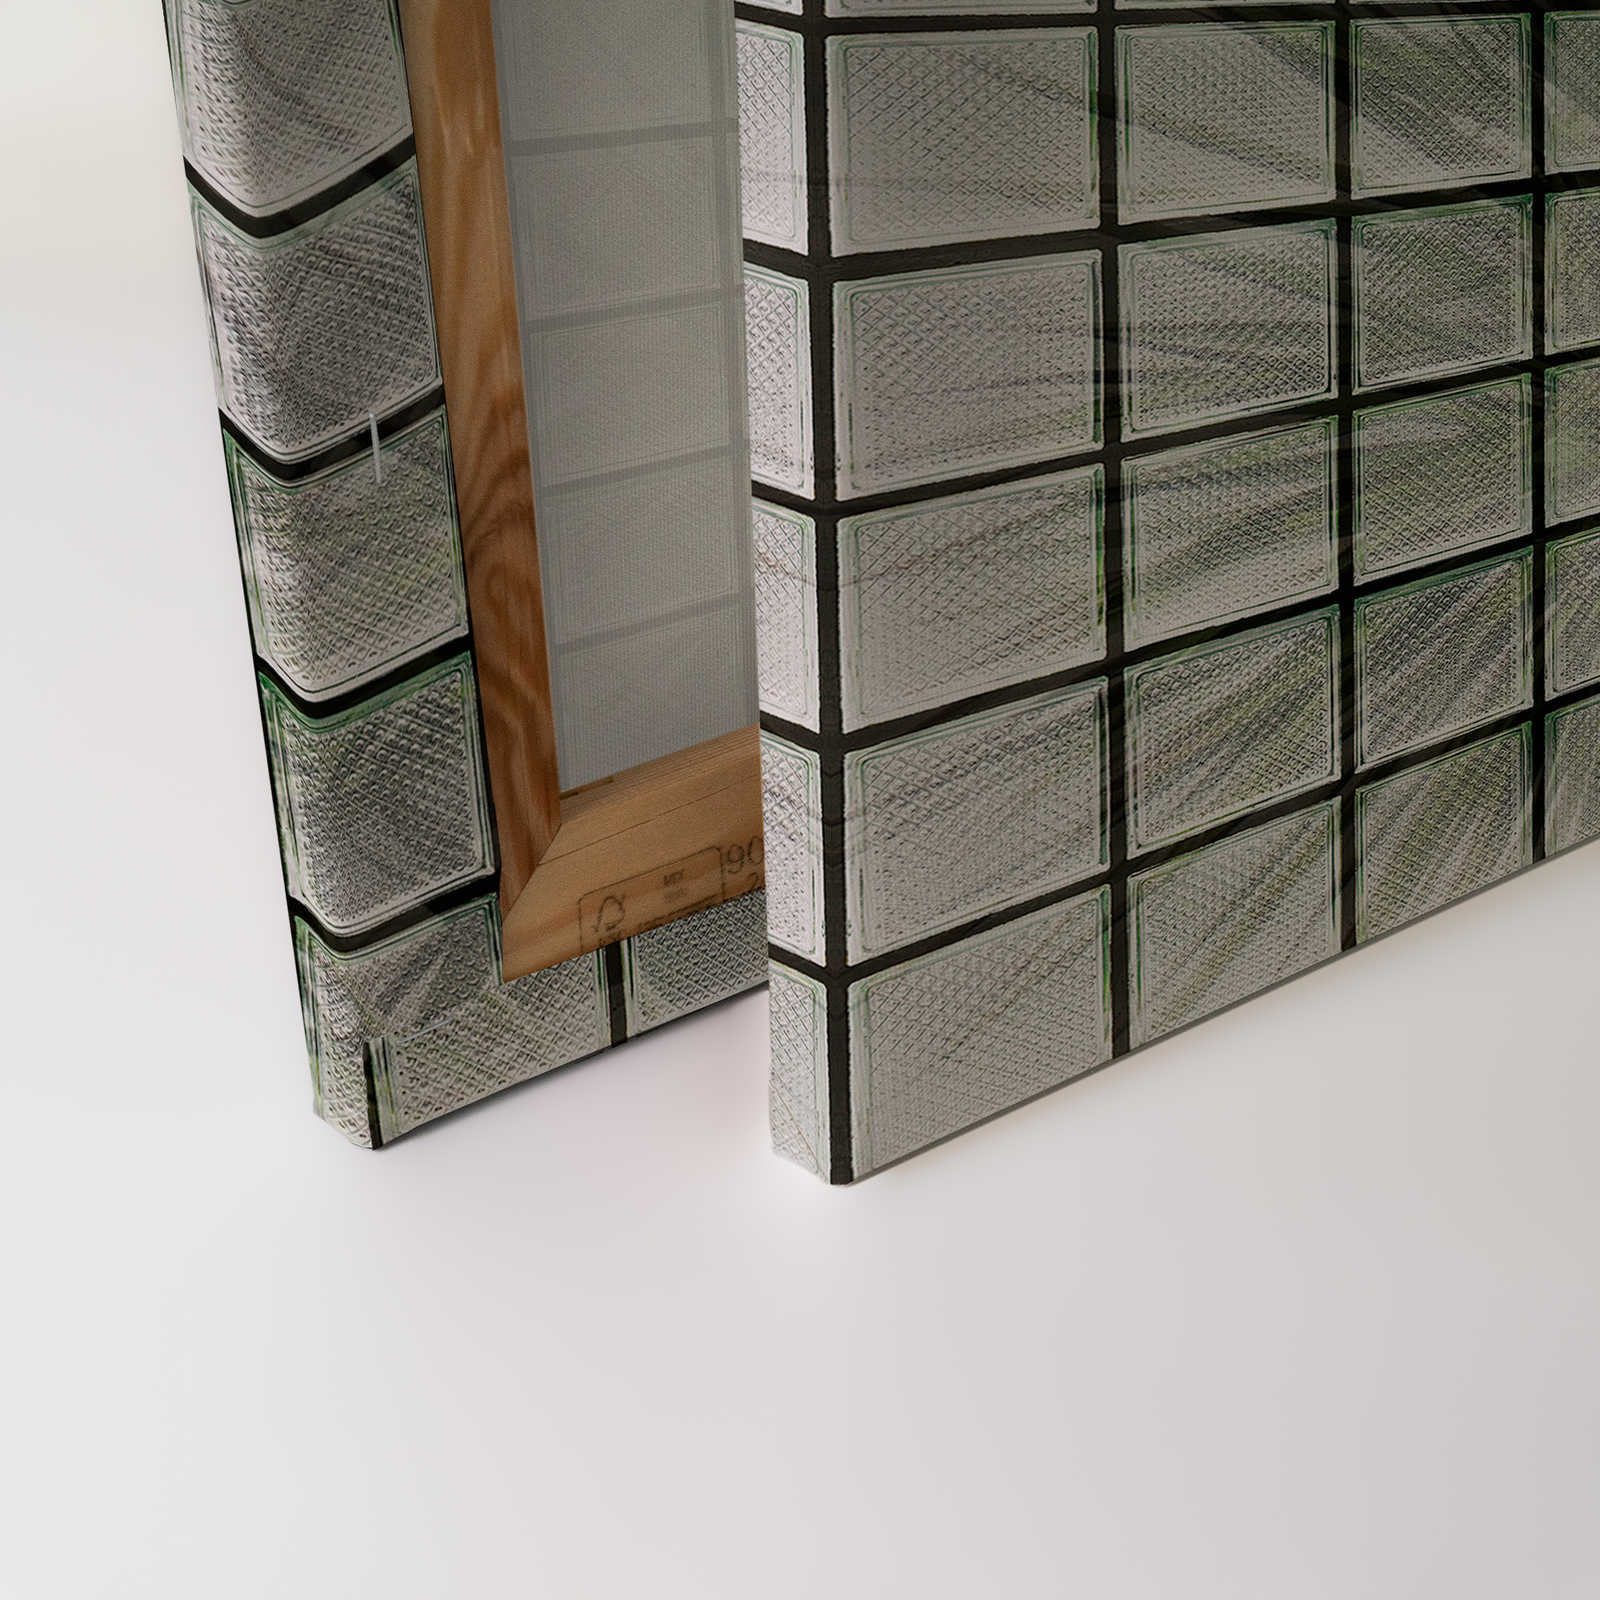             Green House 1 - Leinwandbild Palmen & Glasbausteine – 1,20 m x 0,80 m
        